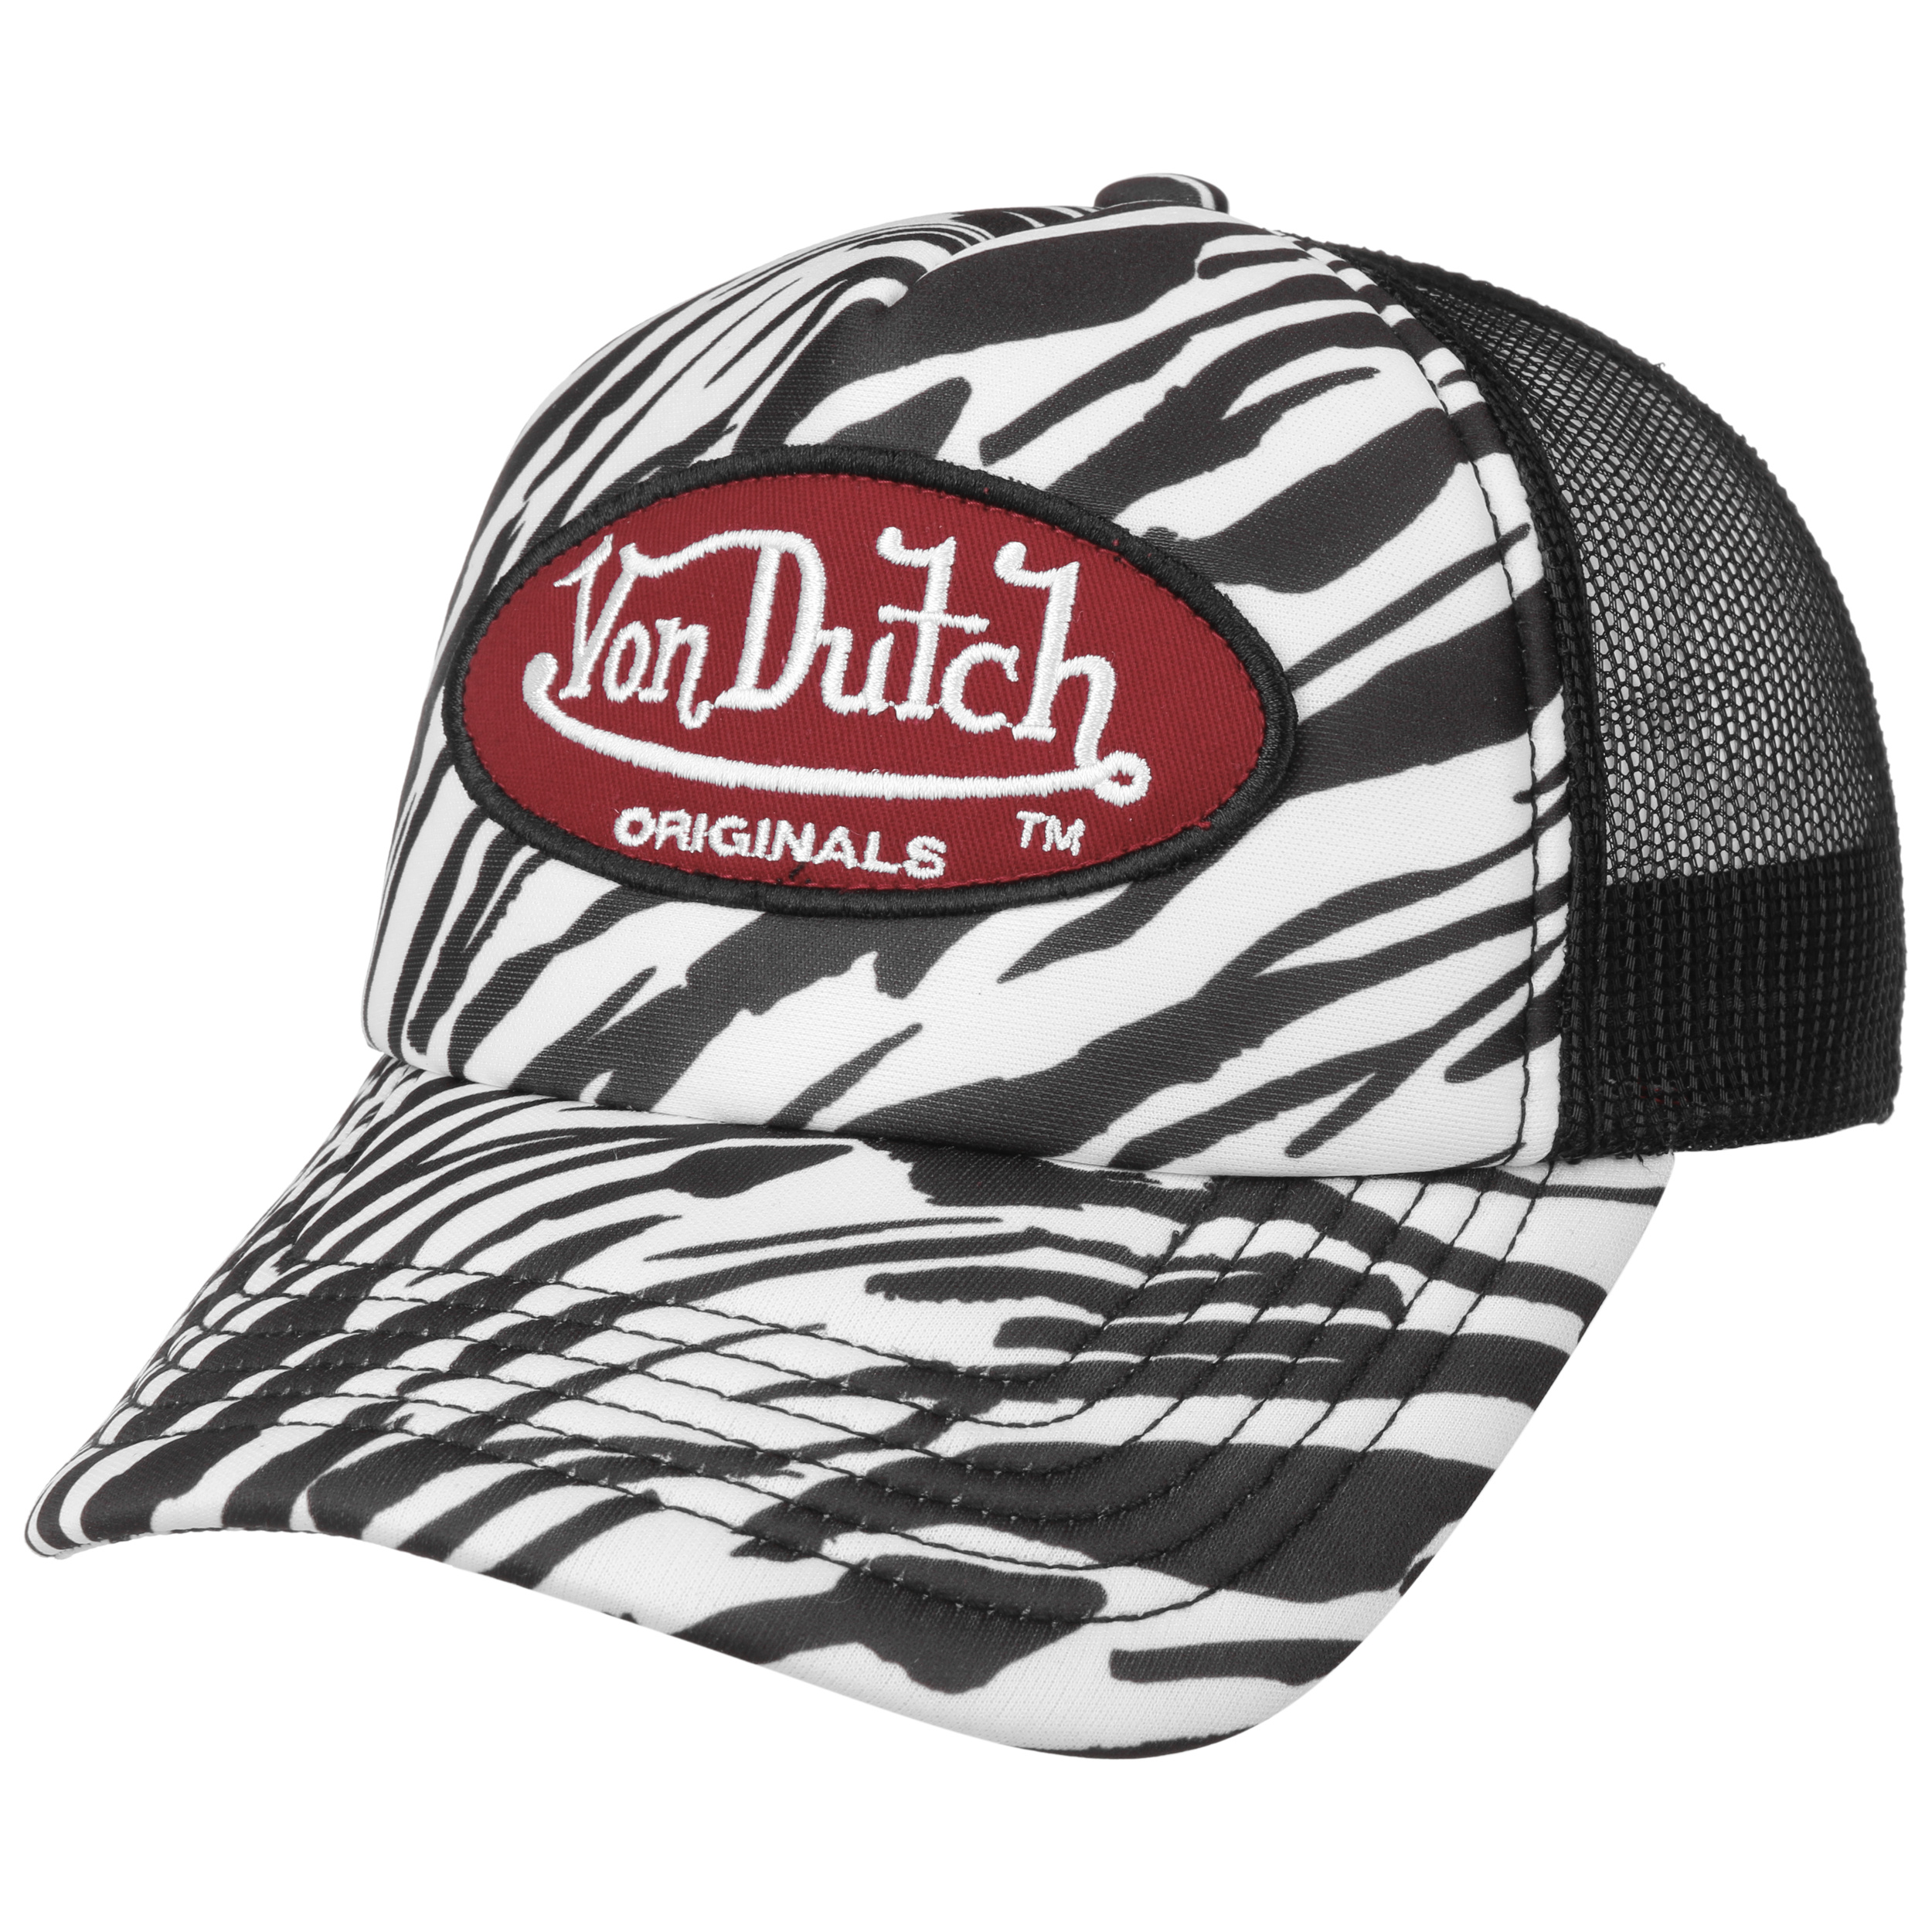 https://img.hatshopping.com/Tampa-Oval-Patch-Zebra-Trucker-Cap-by-Von-Dutch-black-white.63173_rf173.jpg